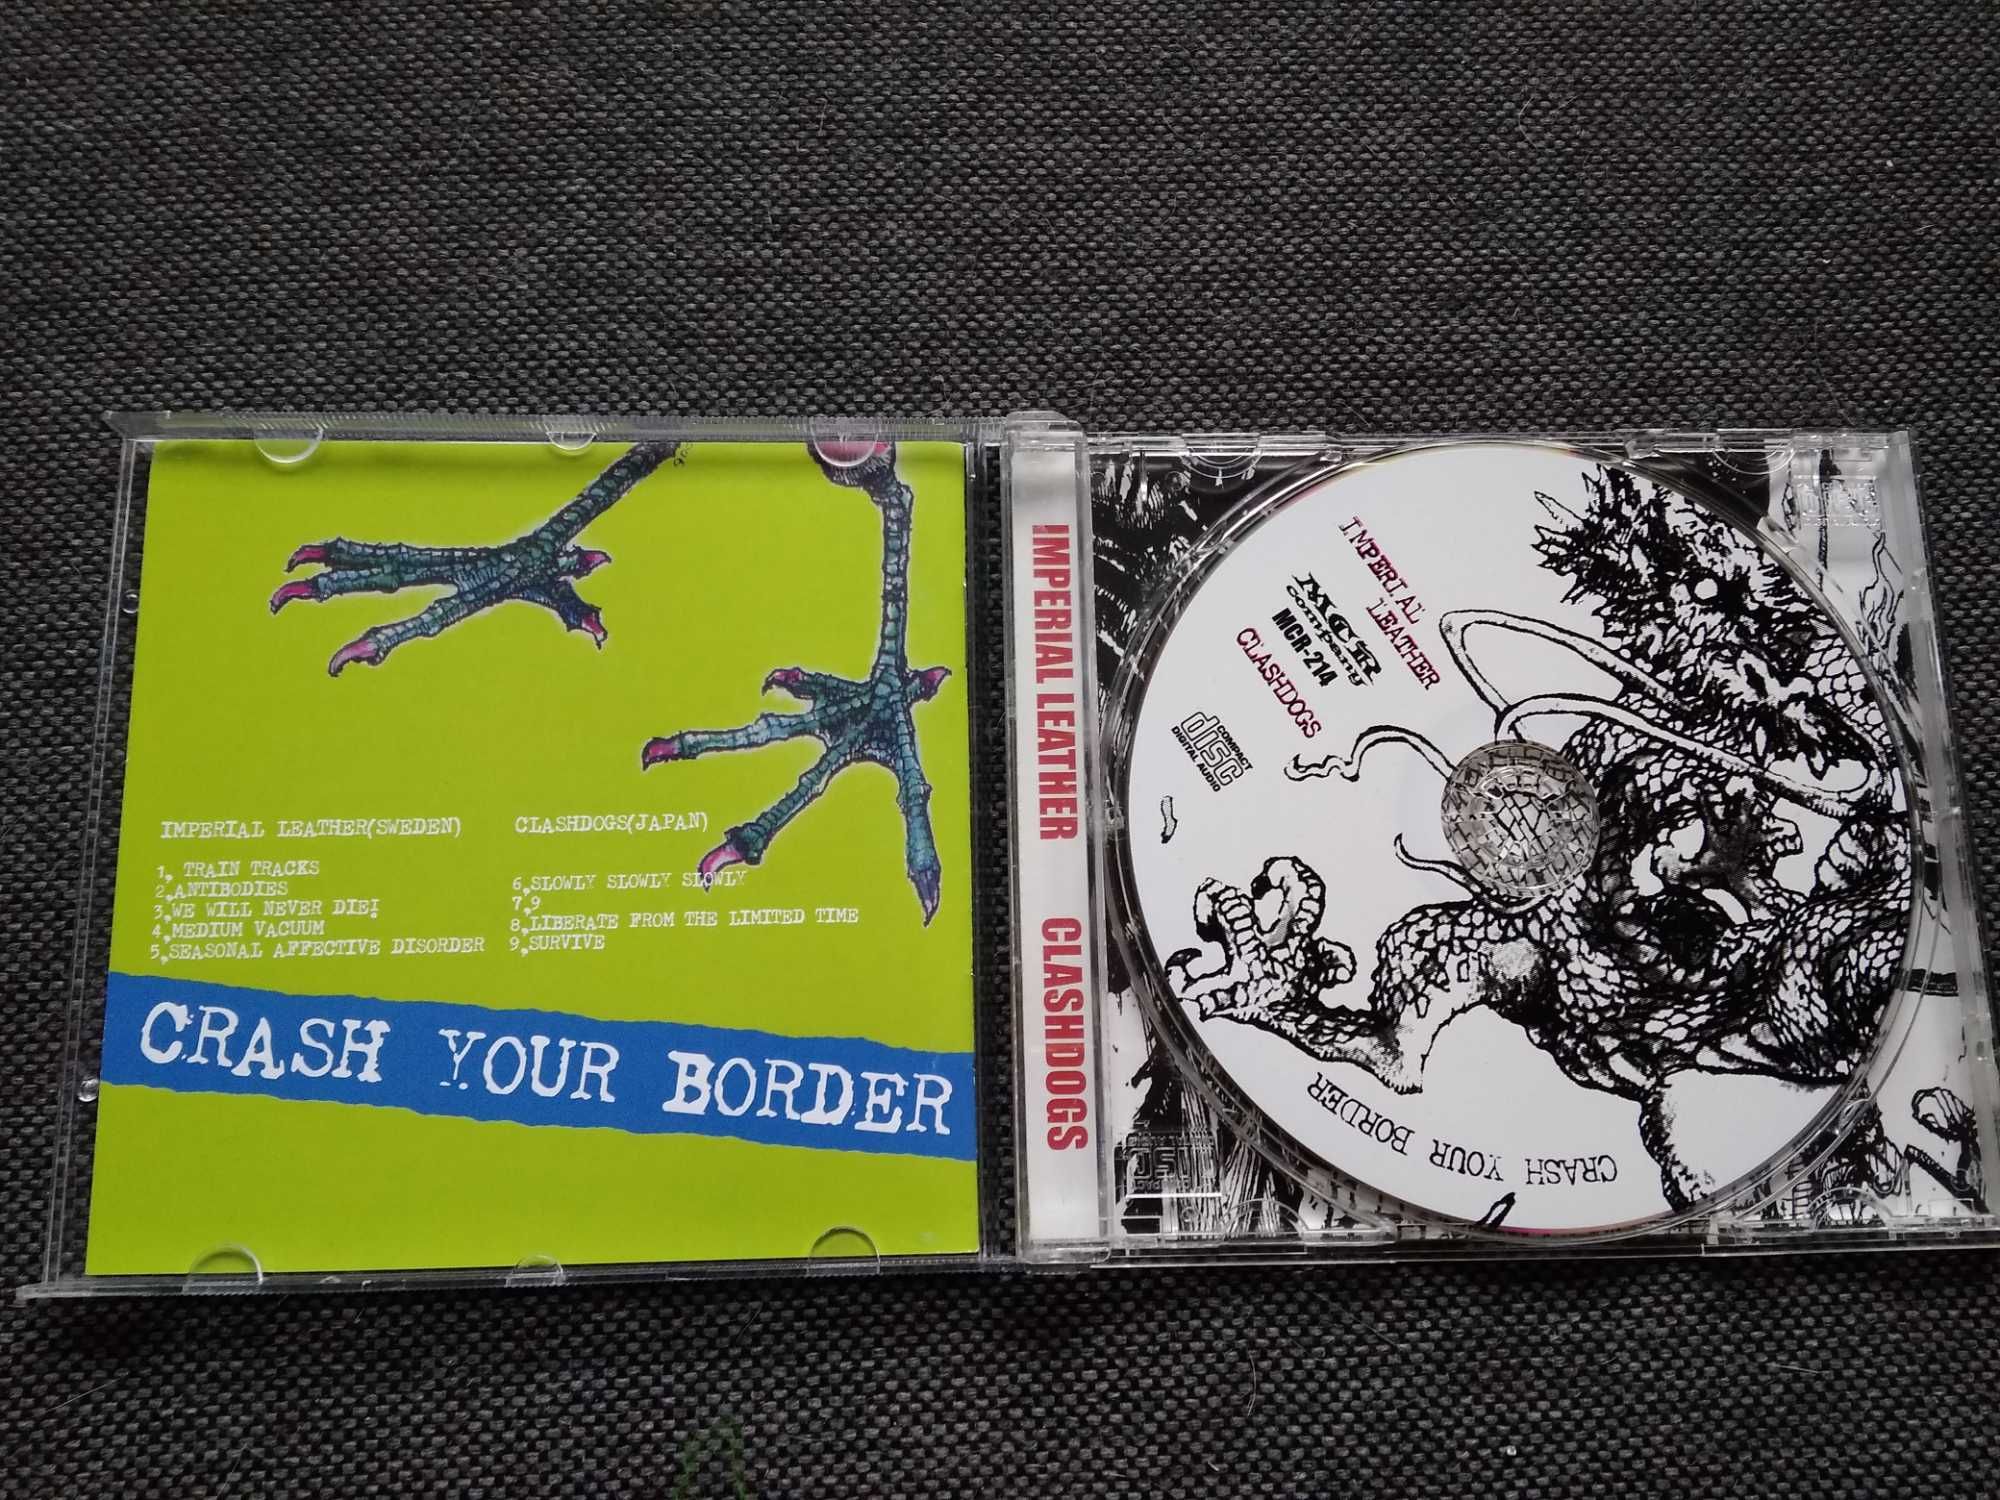 Imperial Leather / Clashdogs ‎– Crash Your Border punk